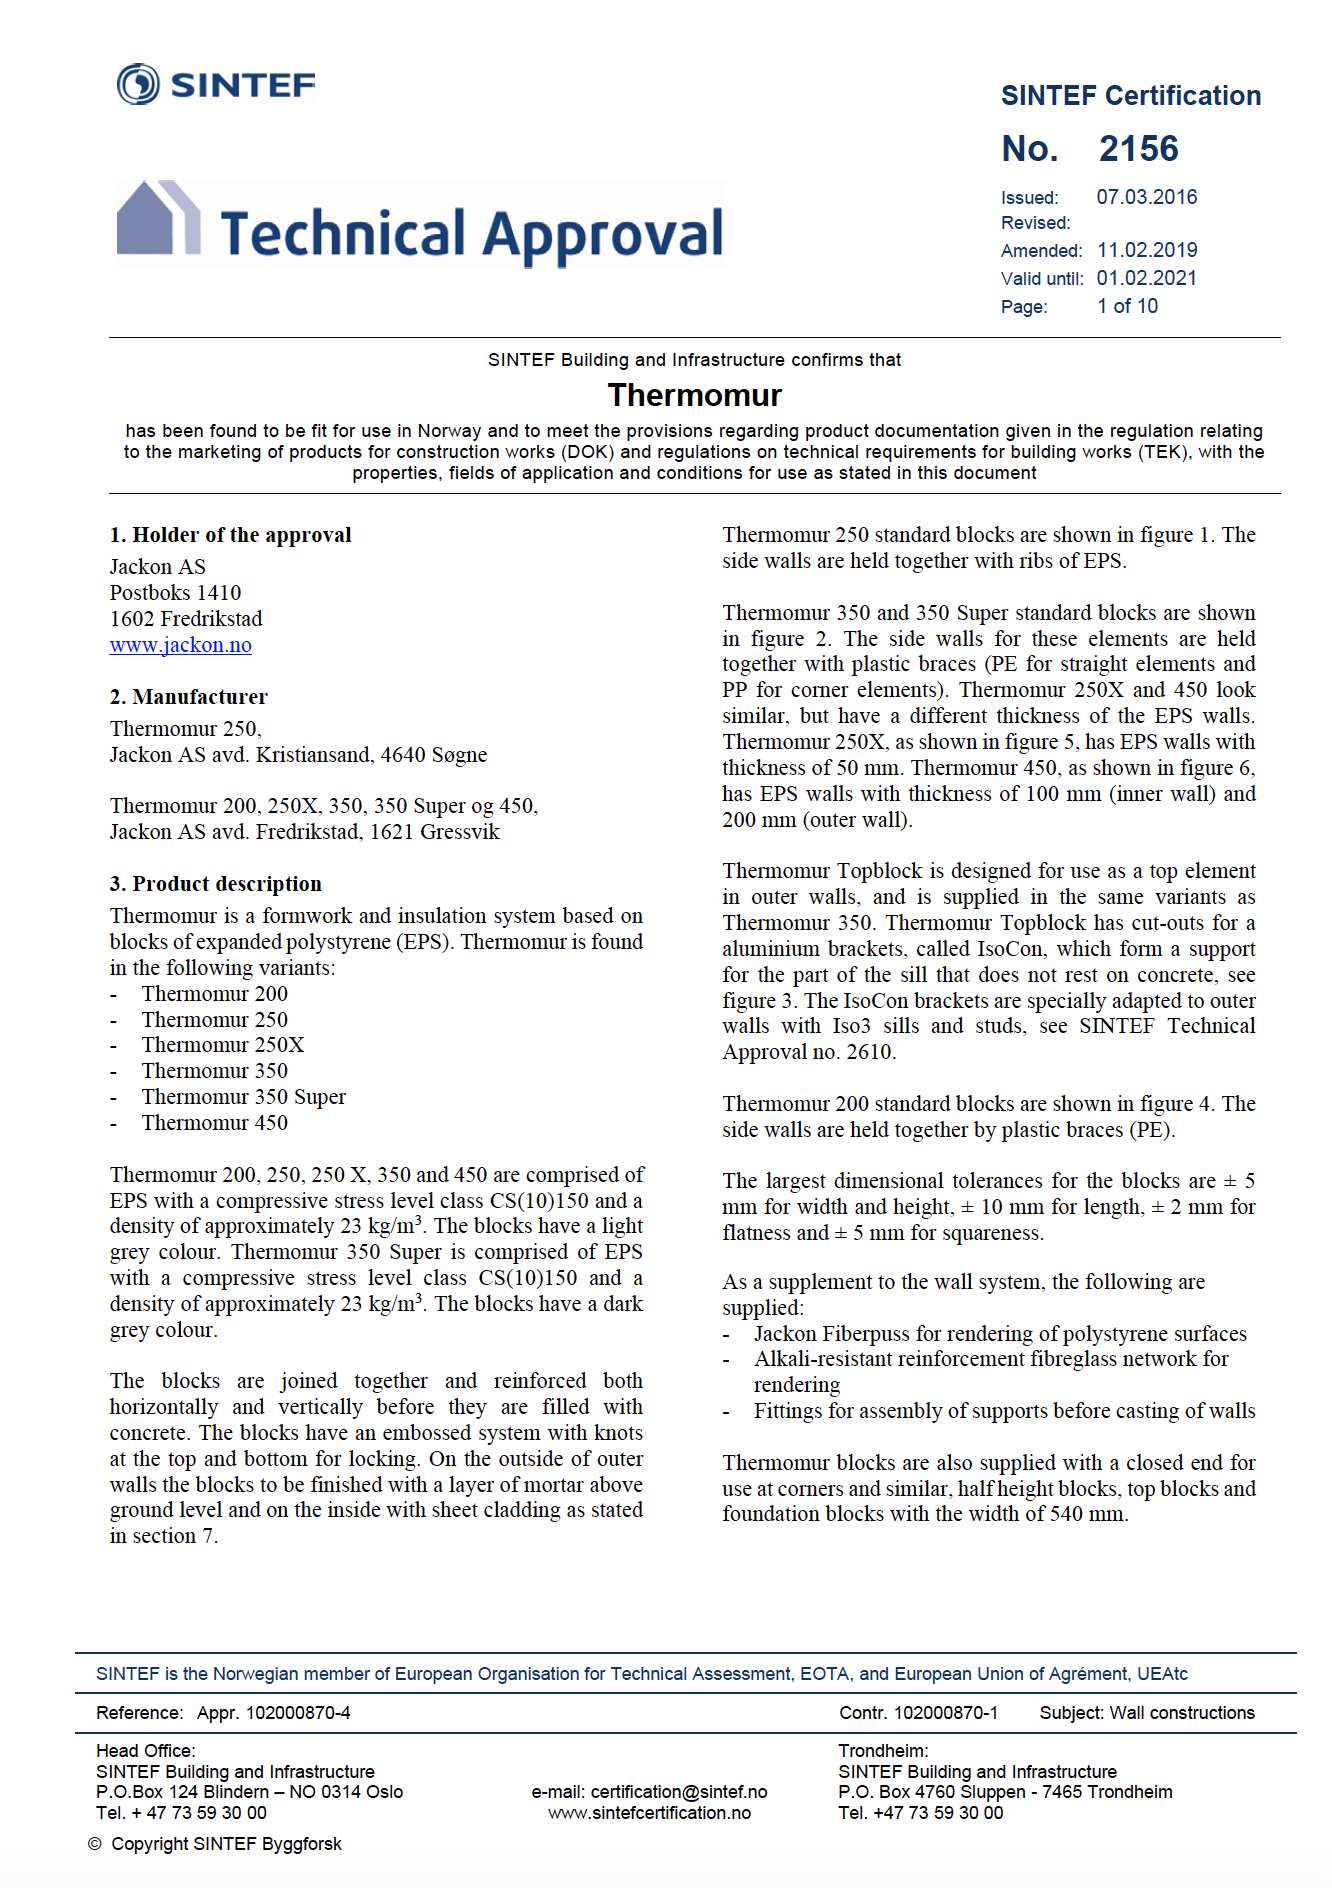 Sintef 2156 certificate – Thermomur ICF